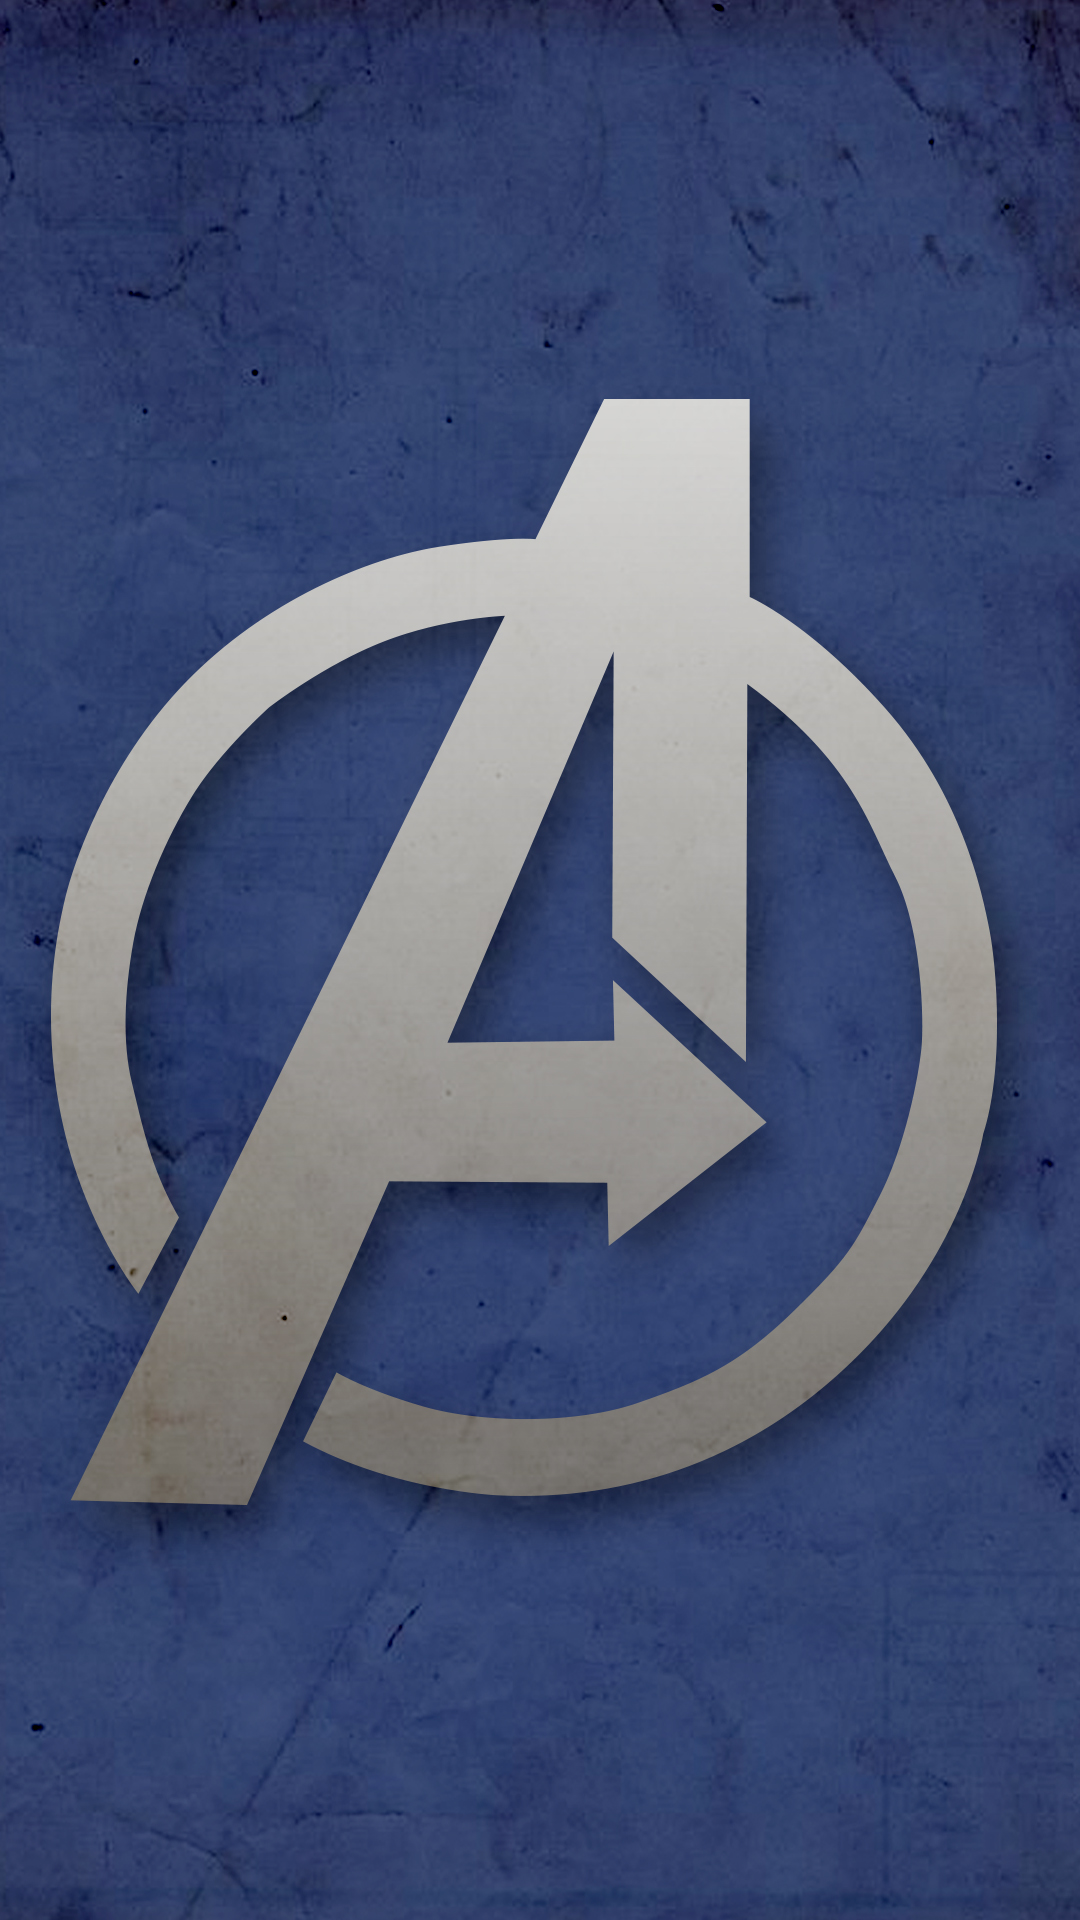 Avengers - iPhone Wallpaper by truillusionstudios on DeviantArt